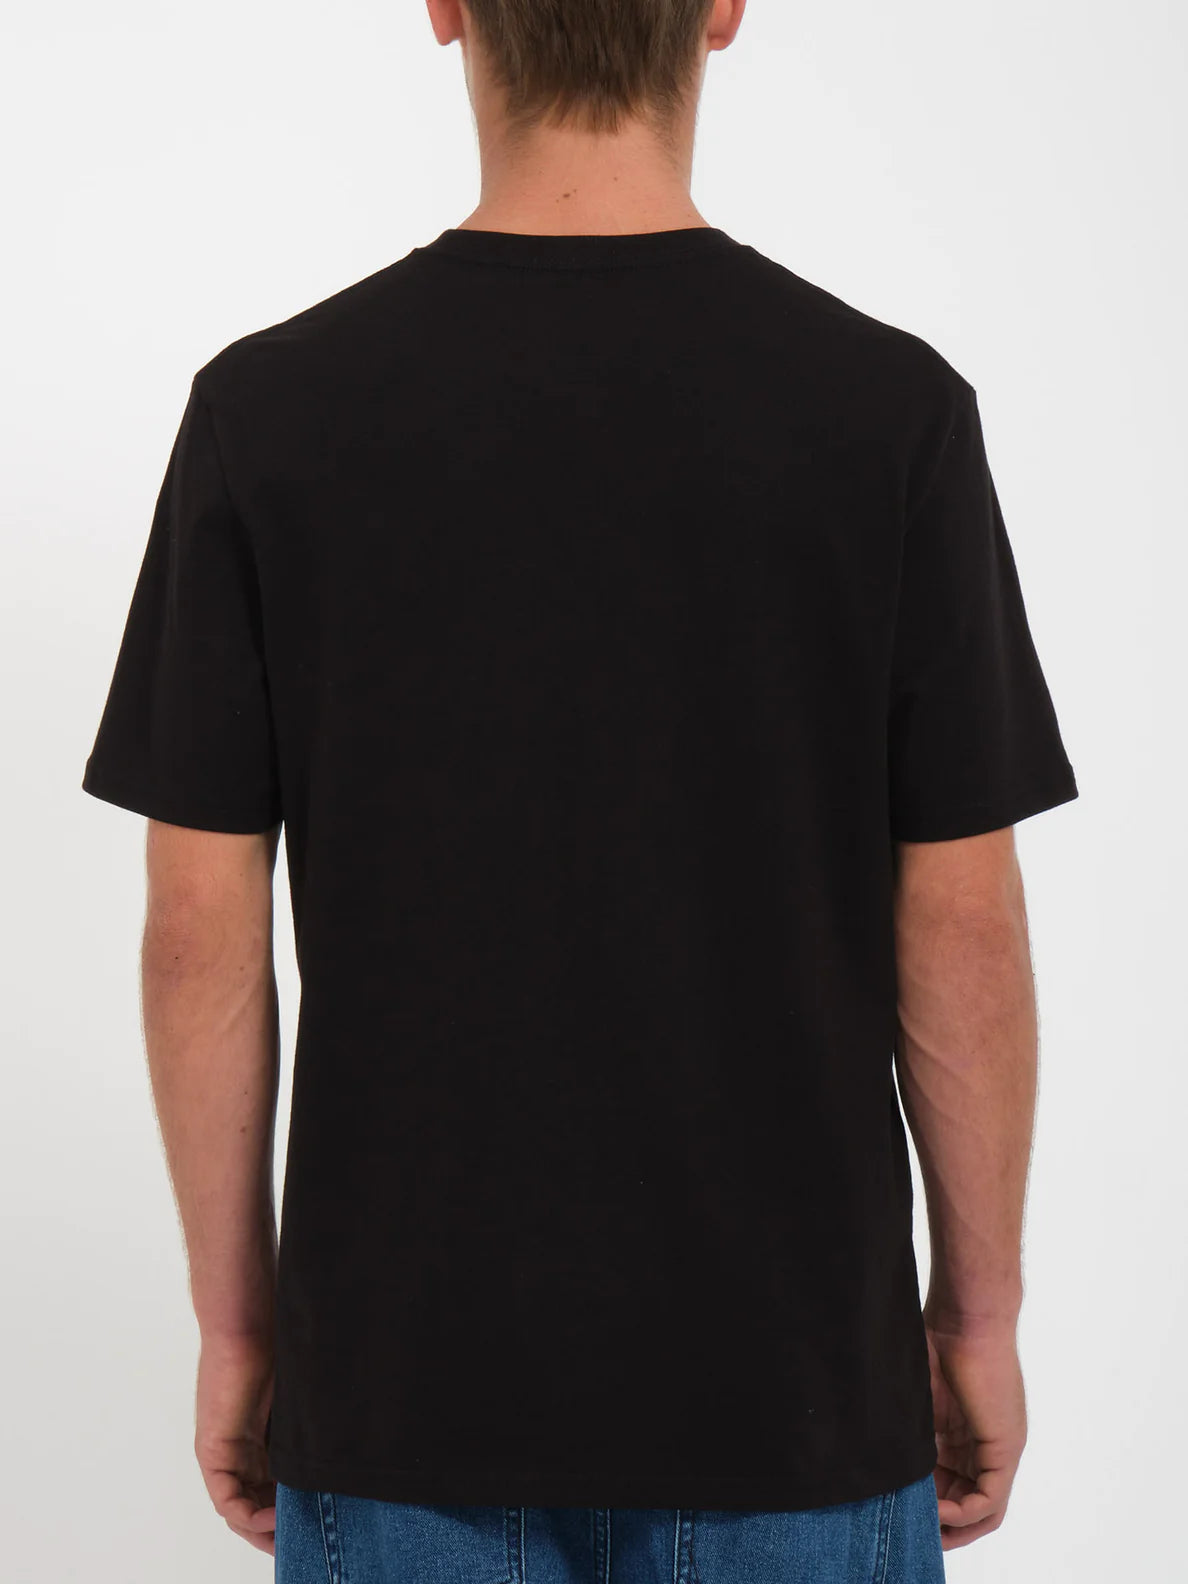 Camiseta Volcom Herbie - Black